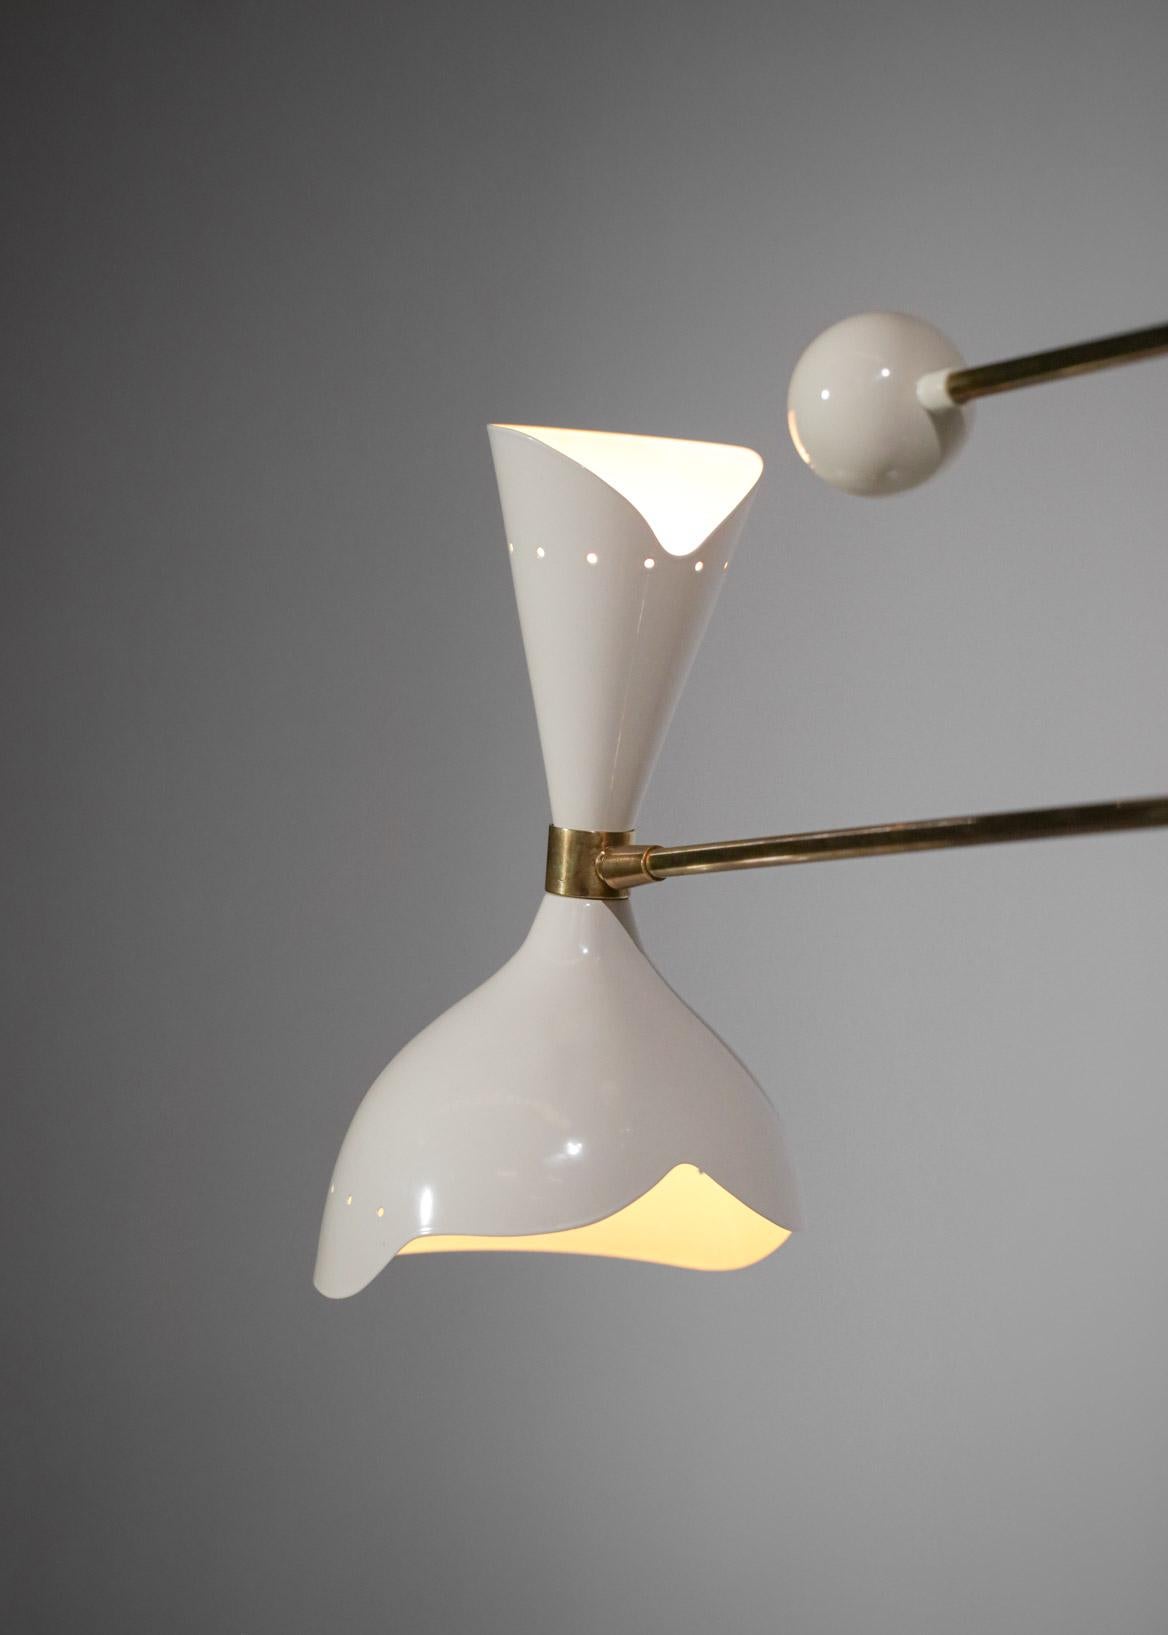 Contemporary Modern Italian Hanging Lamp Brass Pendulum, Vintage Stilnovo Design Giroue F142 For Sale